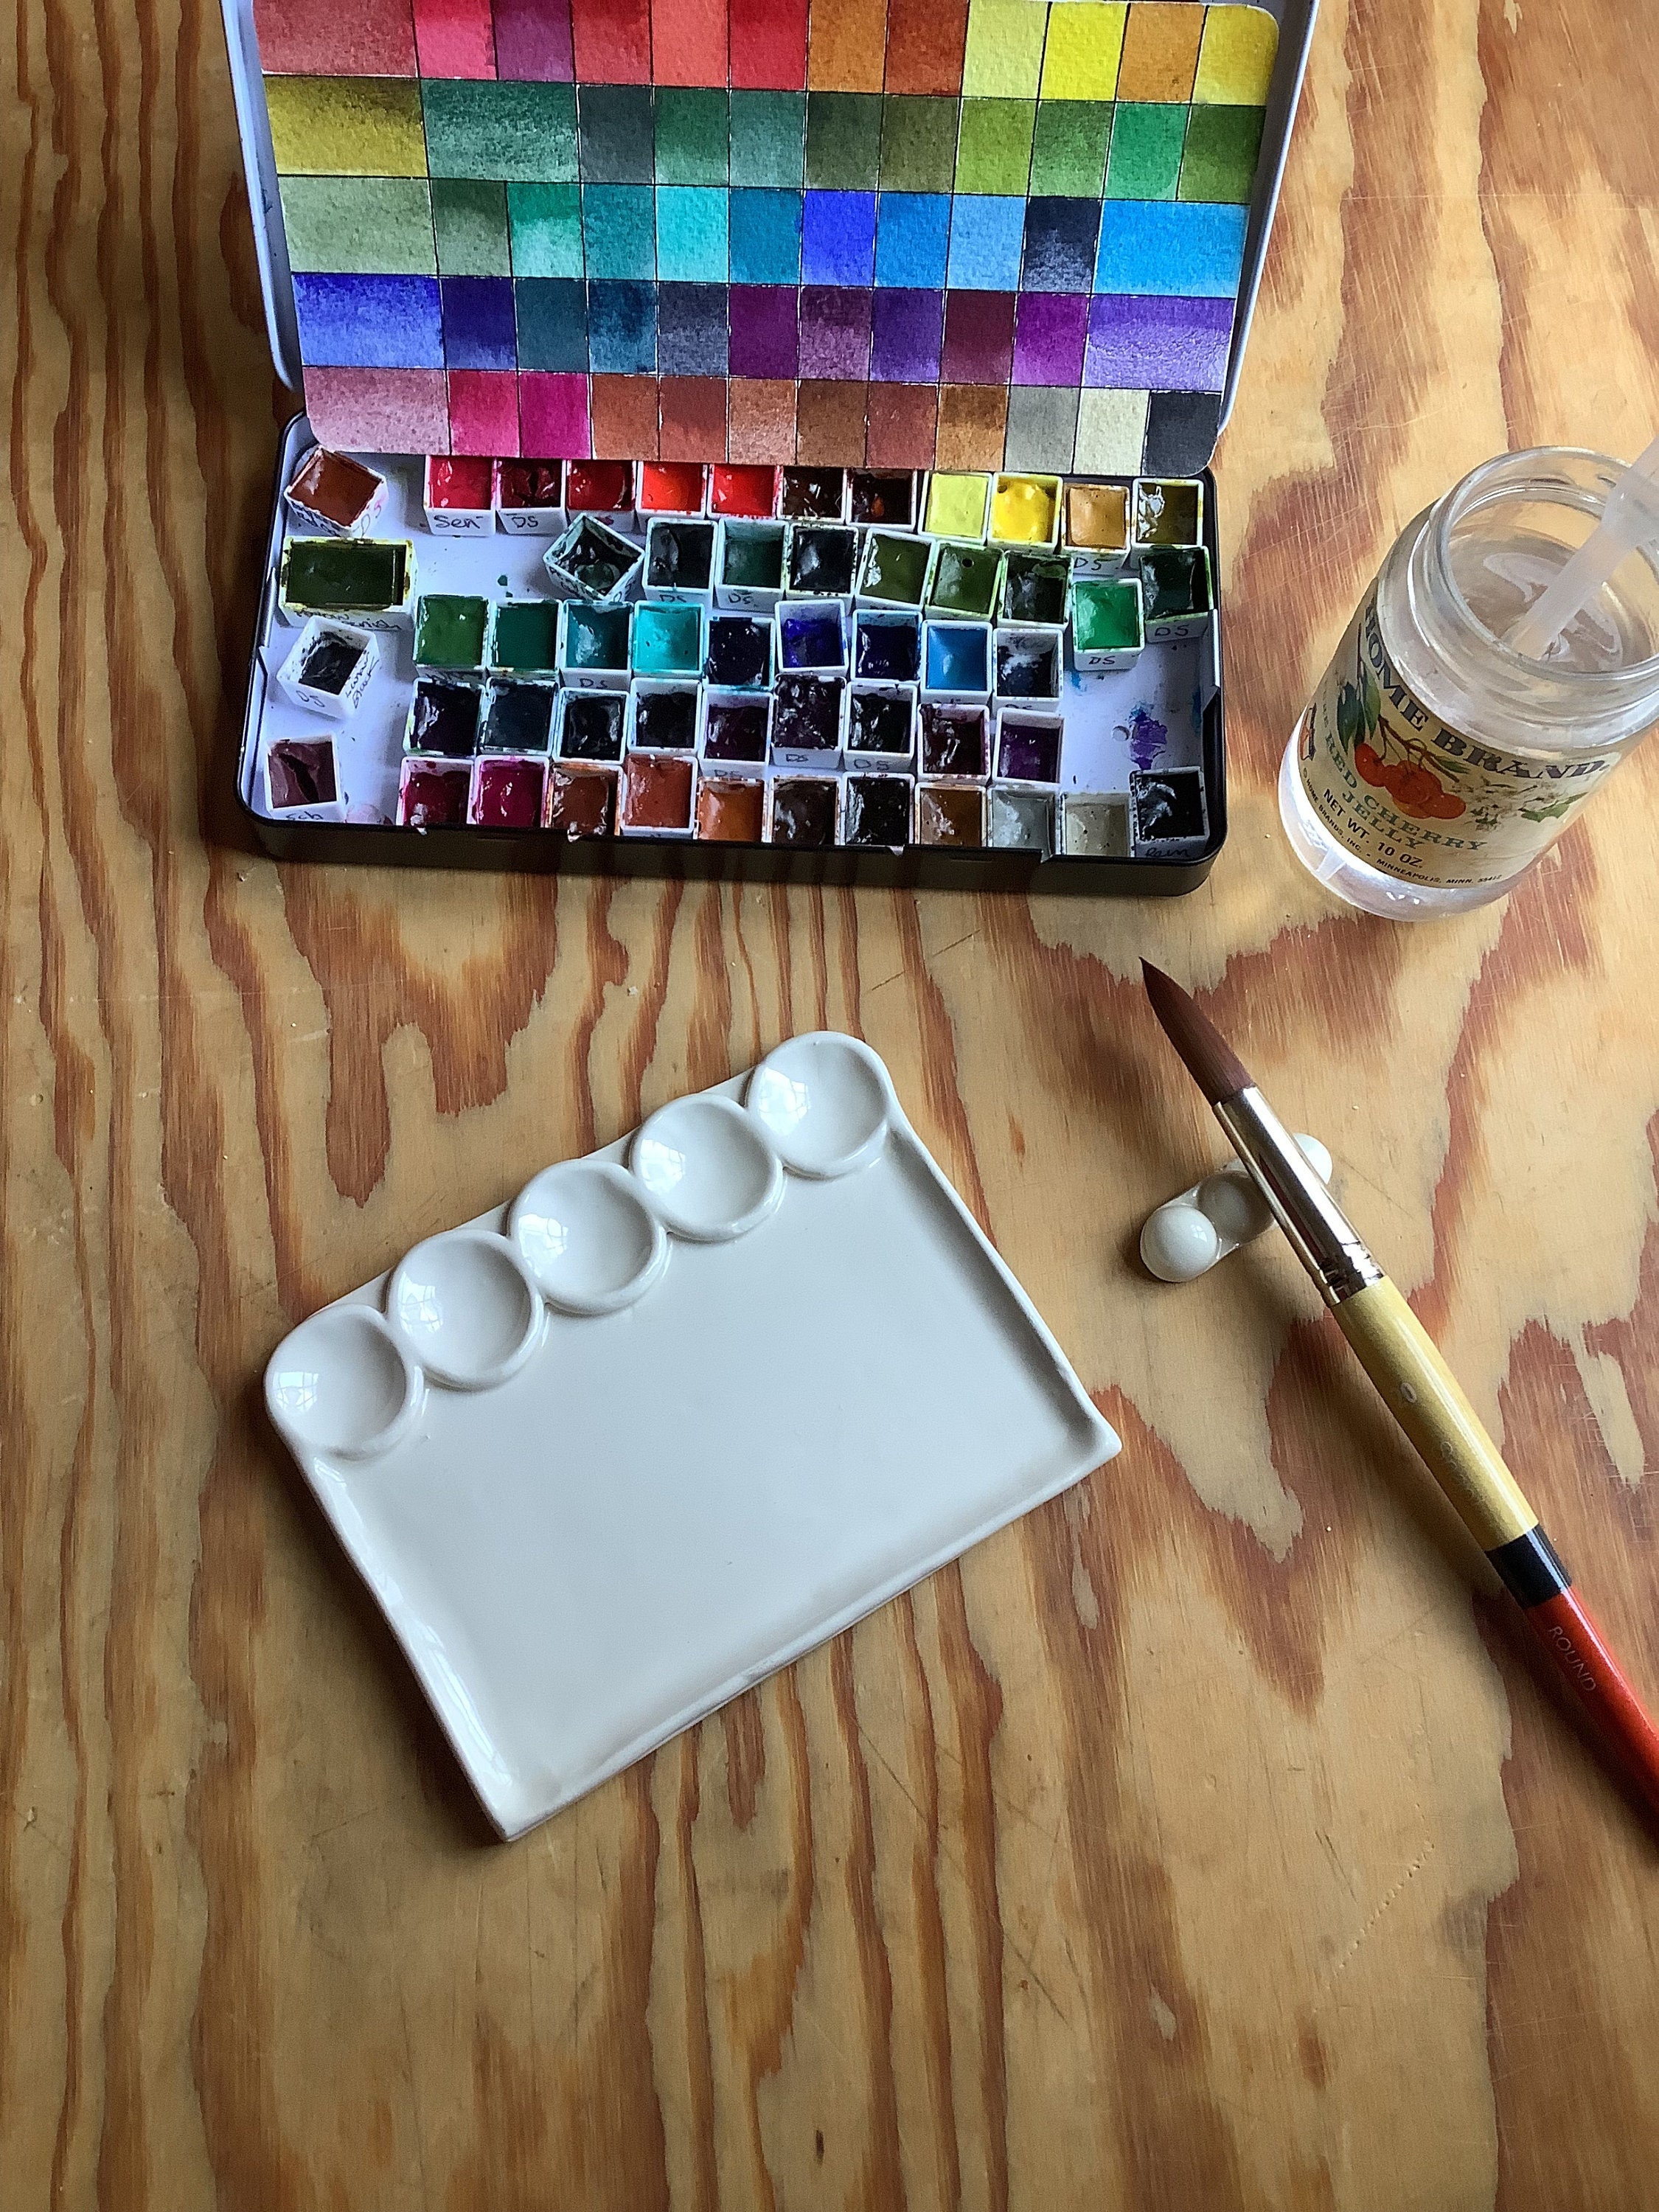 10 Well Watercolor Paint Palette– Let's Make Art